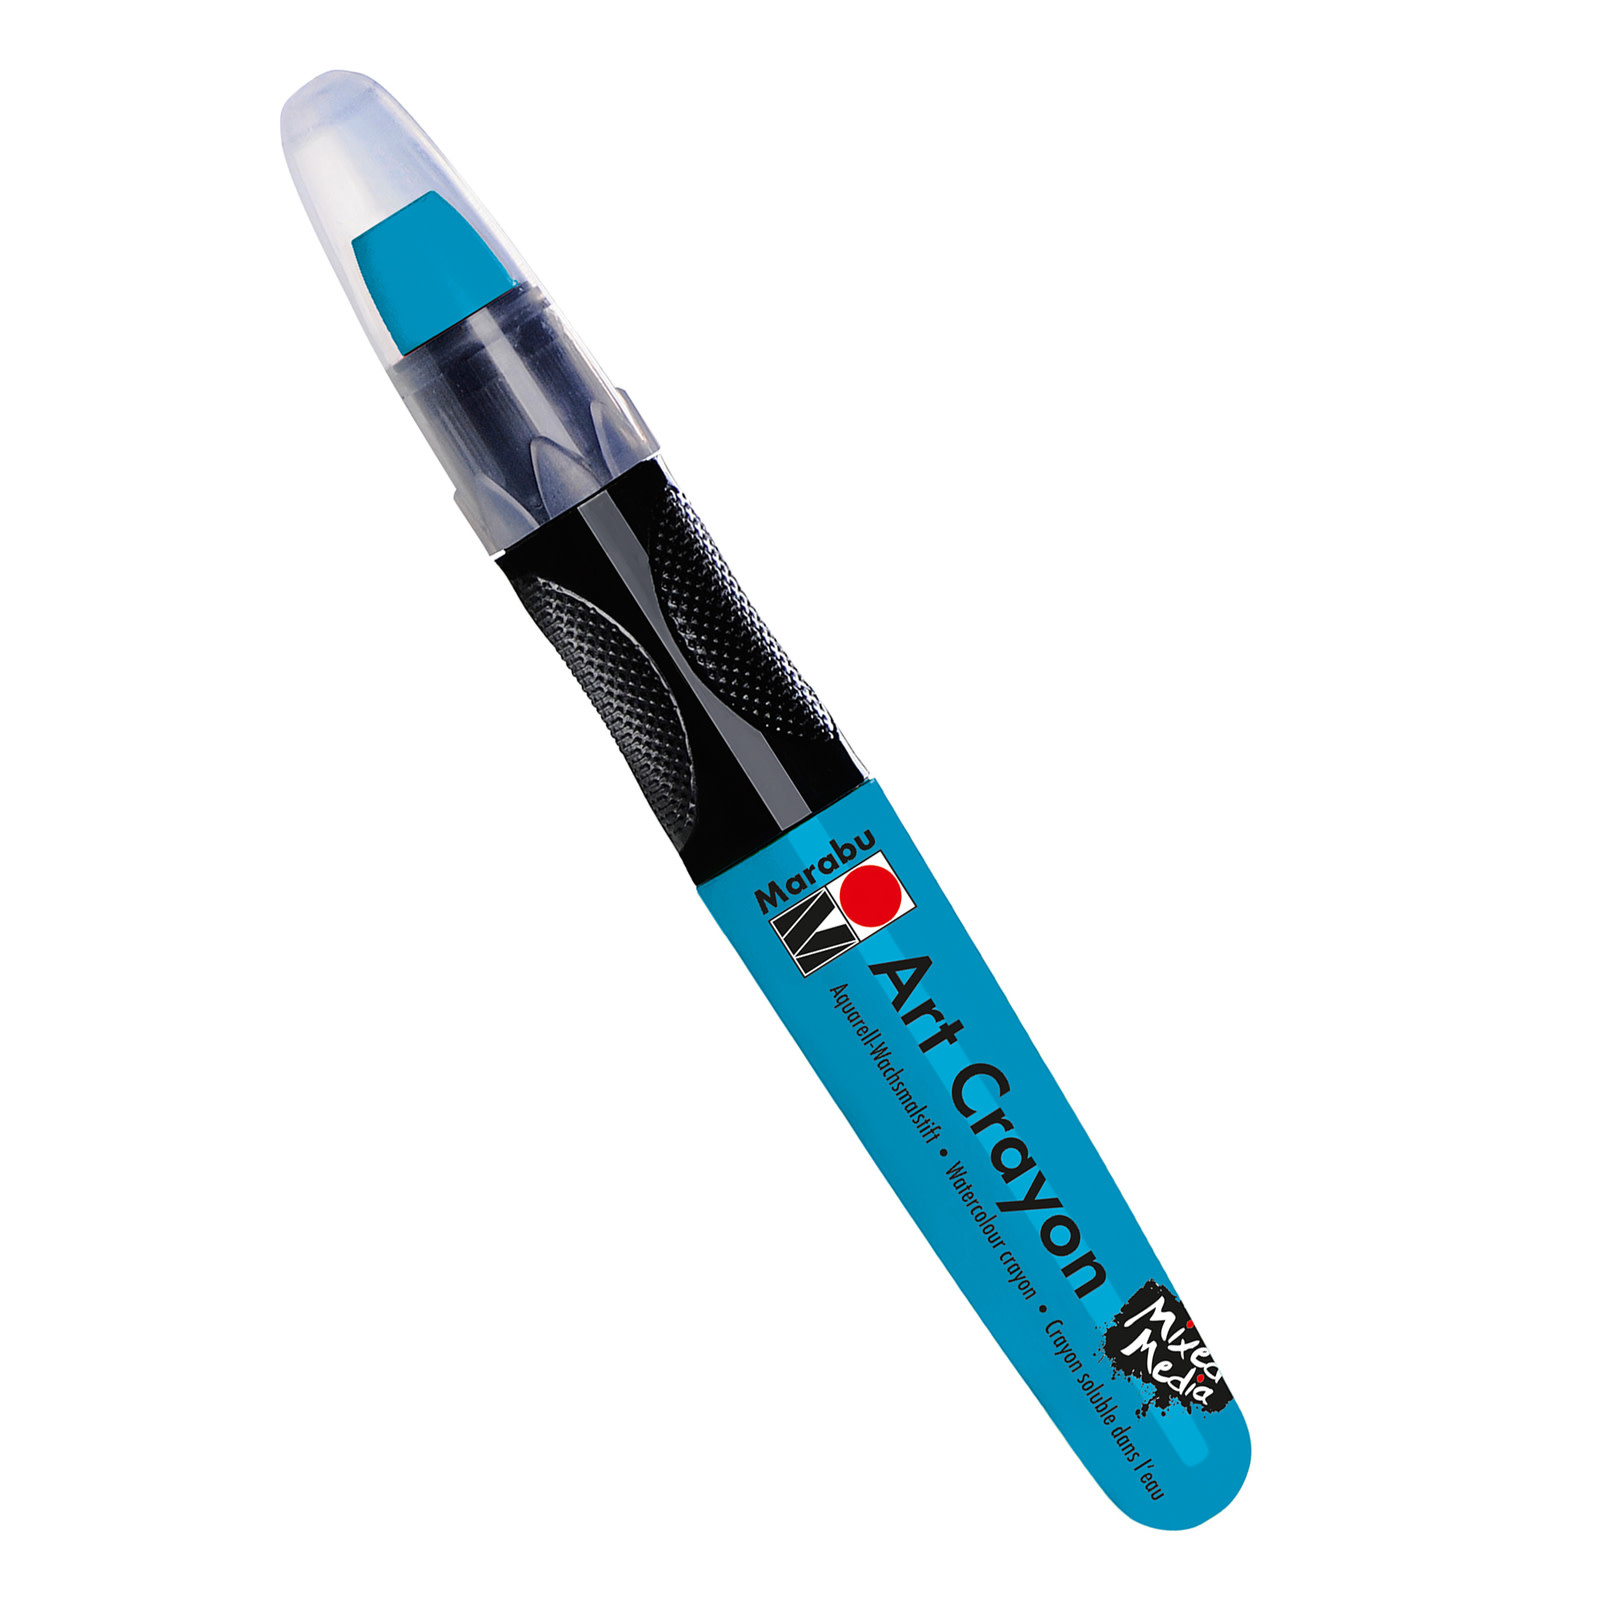 Marabu Art Crayons, Turquoise - Water Soluble Wax